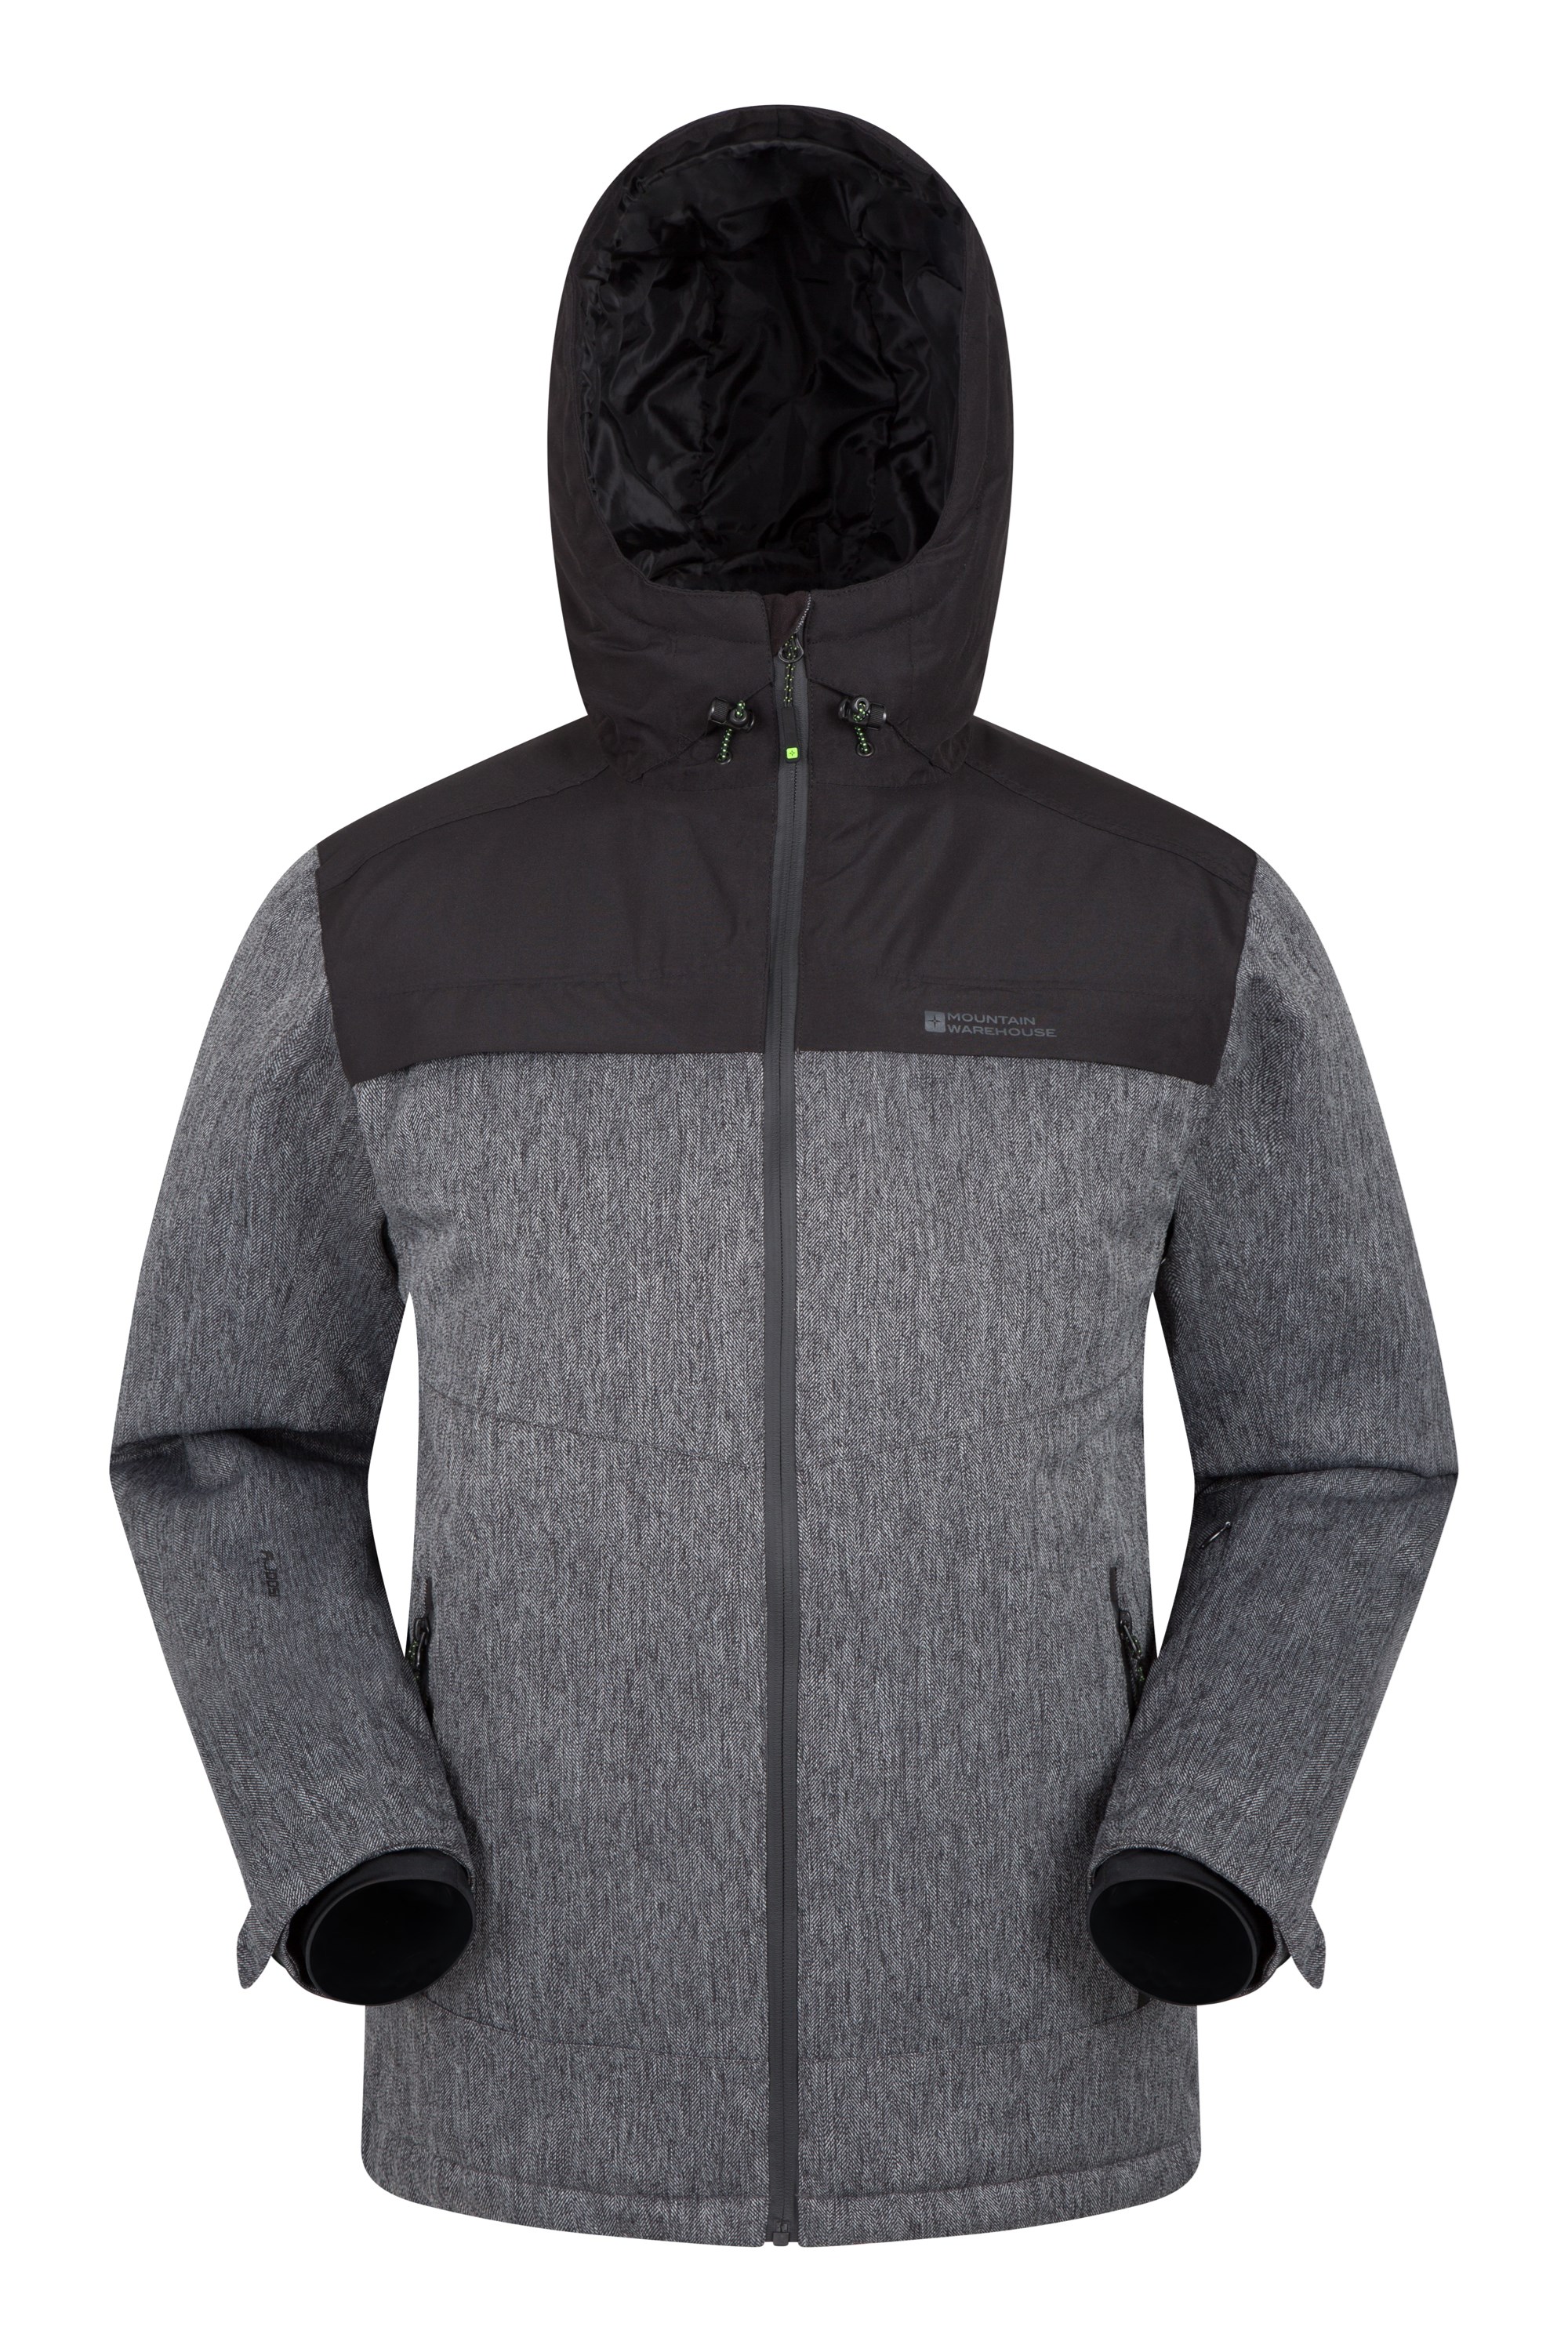 Mountain Warehouse Saturn Mens Ski Jacket Grey